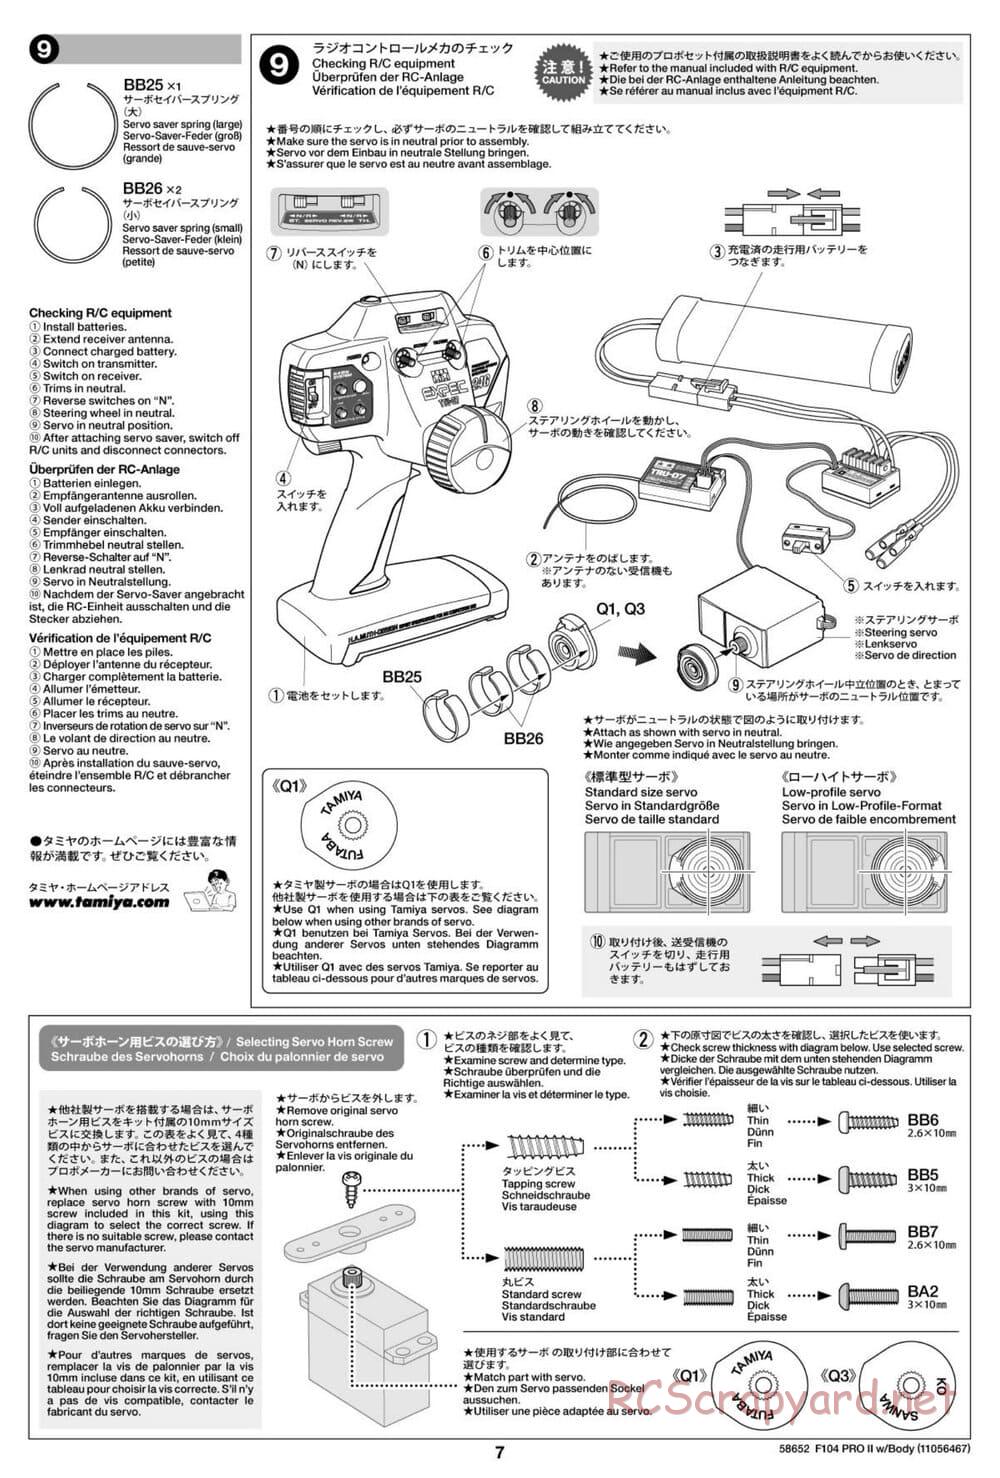 Tamiya - F104 Pro II Chassis - Manual - Page 7